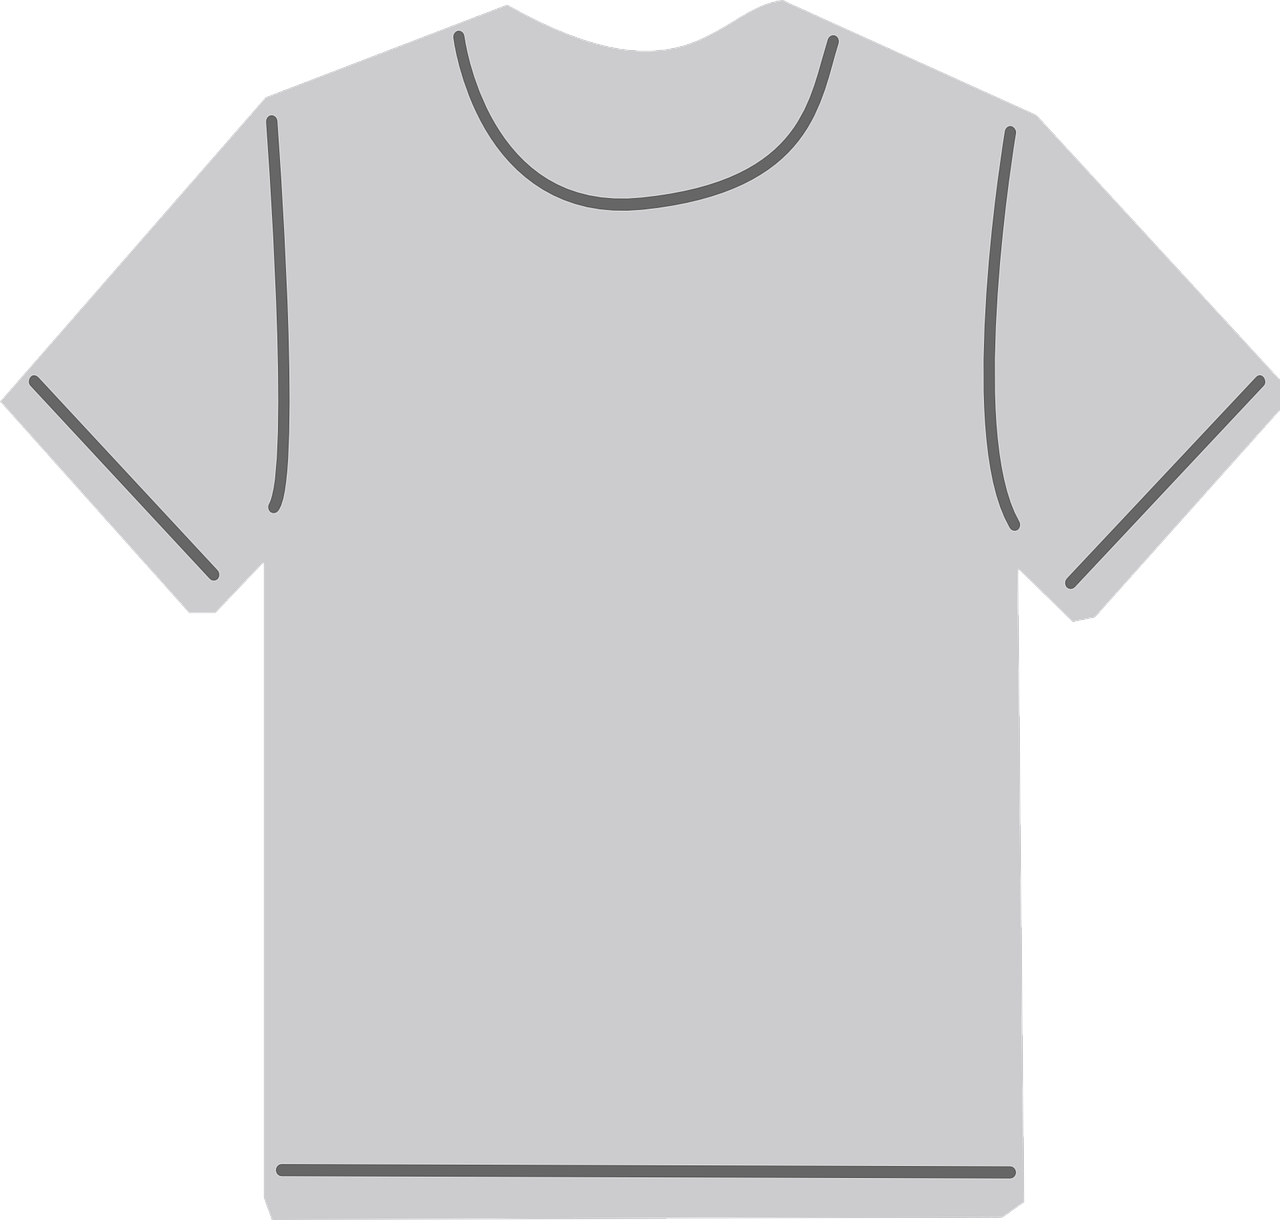 T-shirt,shirt,gray,front,fashion - free image from needpix.com